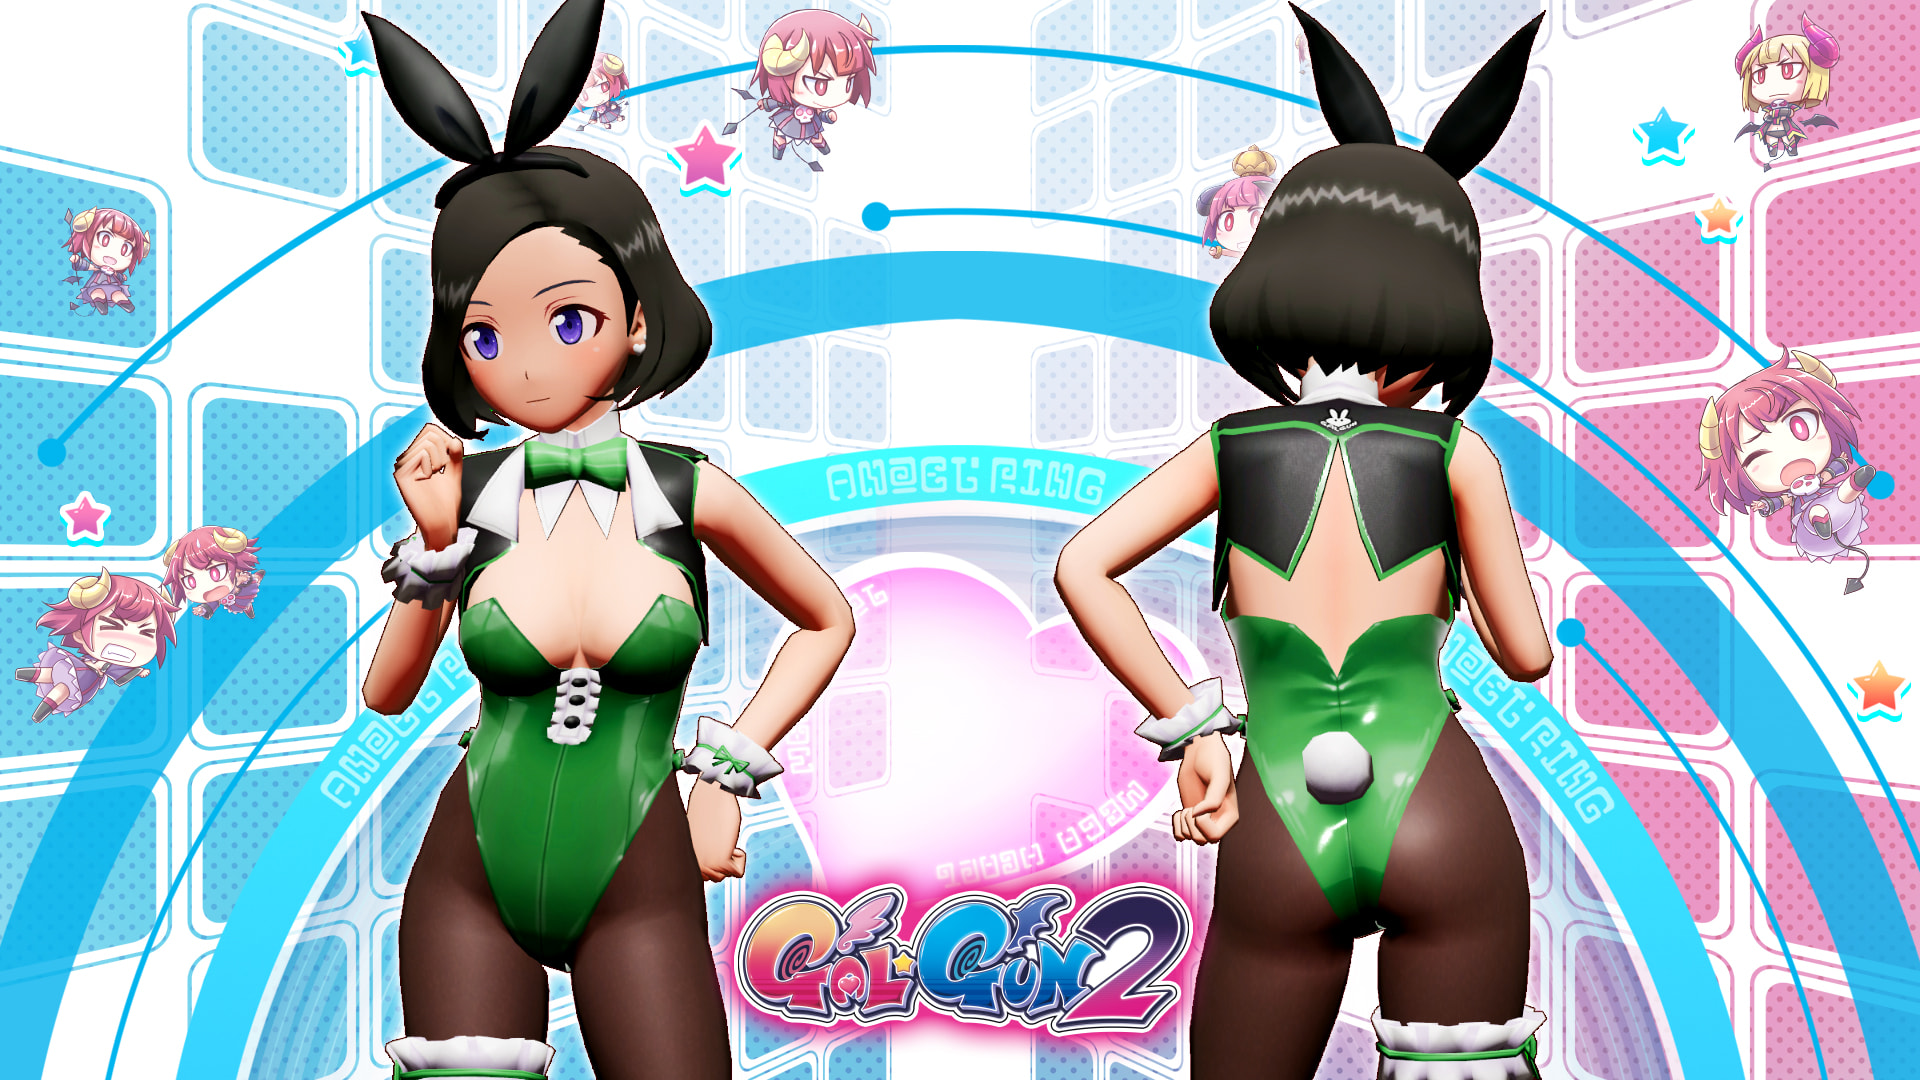 Gal*Gun 2 - Classy Bunny Girl Set 1